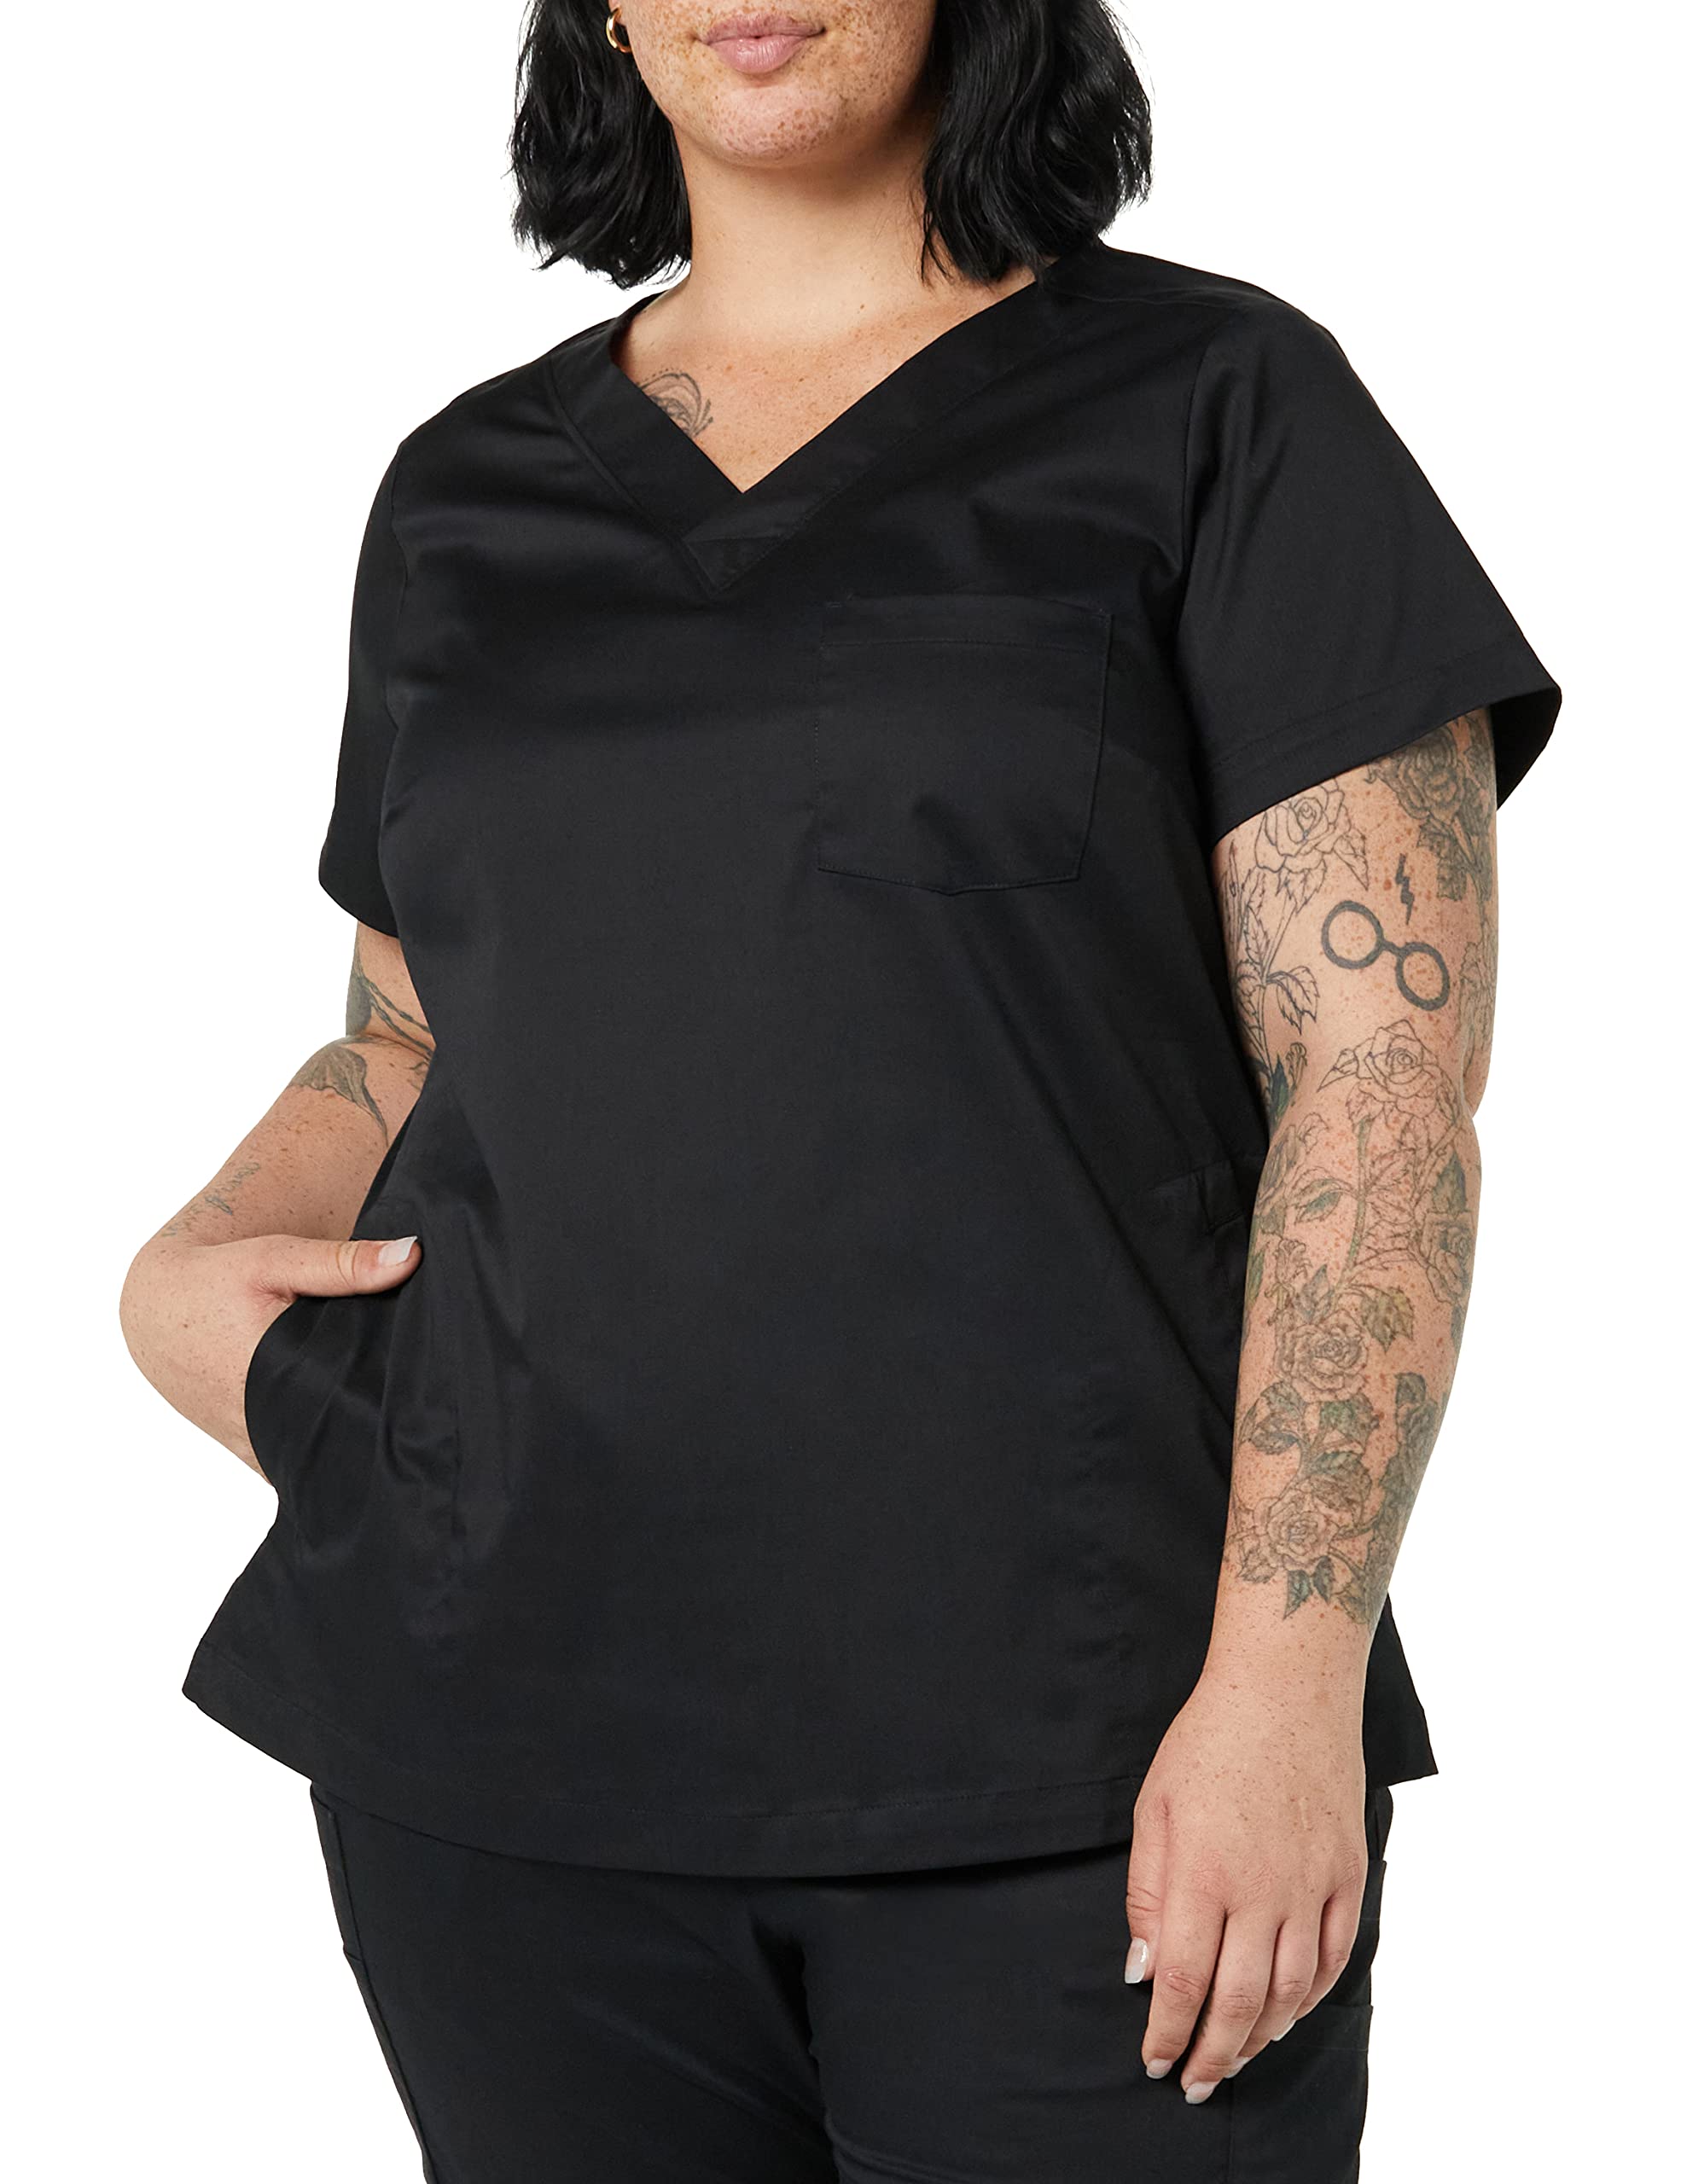 Essentials Women's Classic-fit Short-Sleeve V-Neck T-Shirt